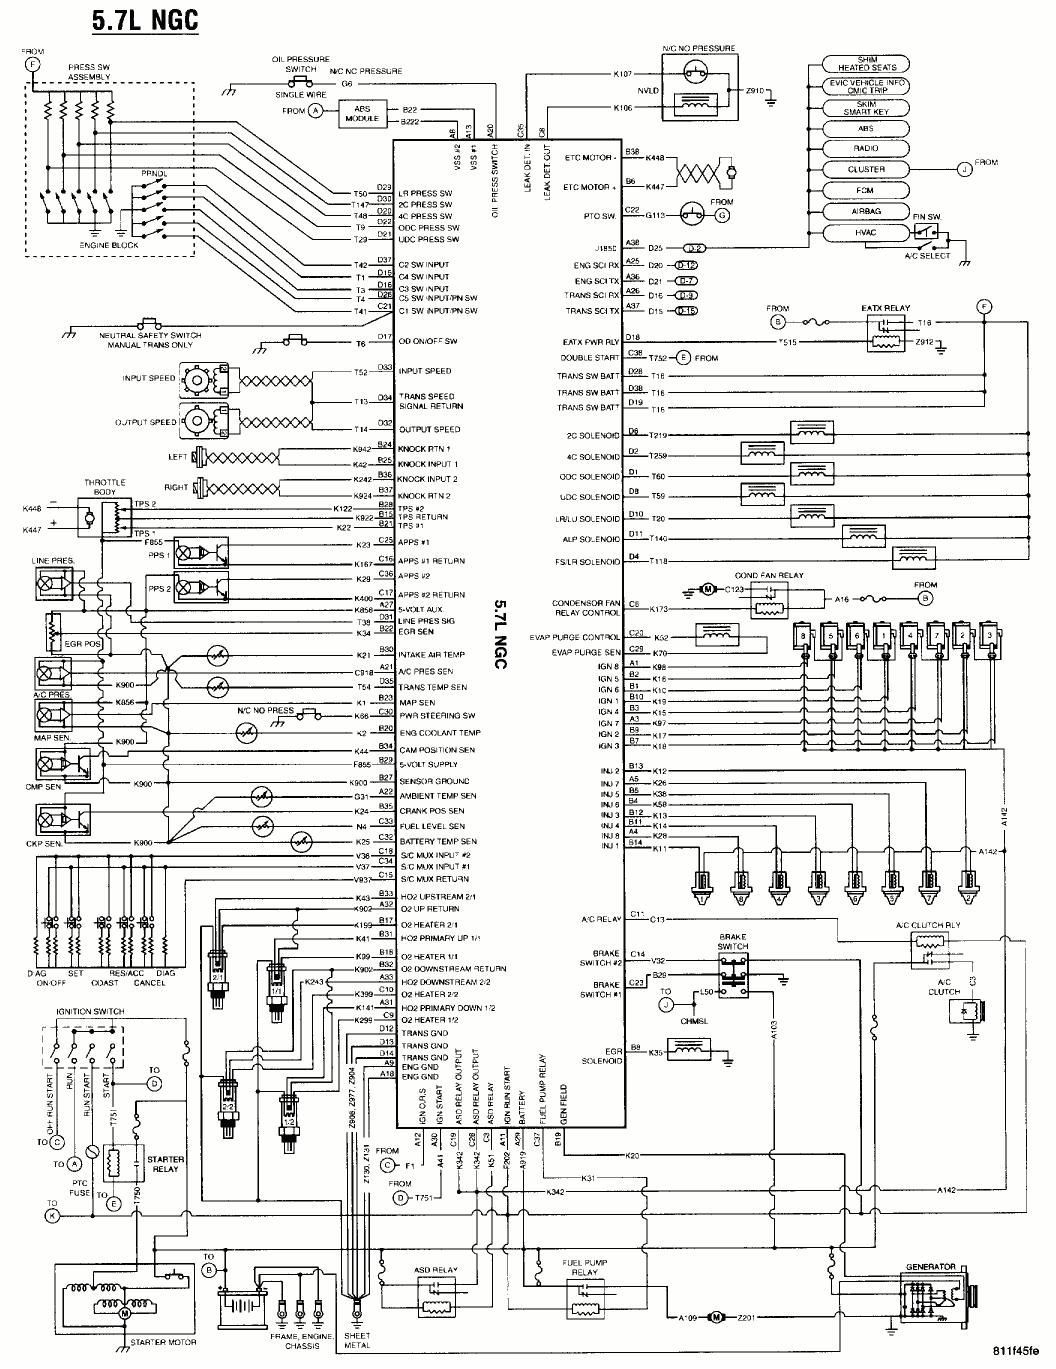 2004 ram wiring diagram wiring diagram expert 2004 dodge ram wiring harness diagram 04 dodge pickup